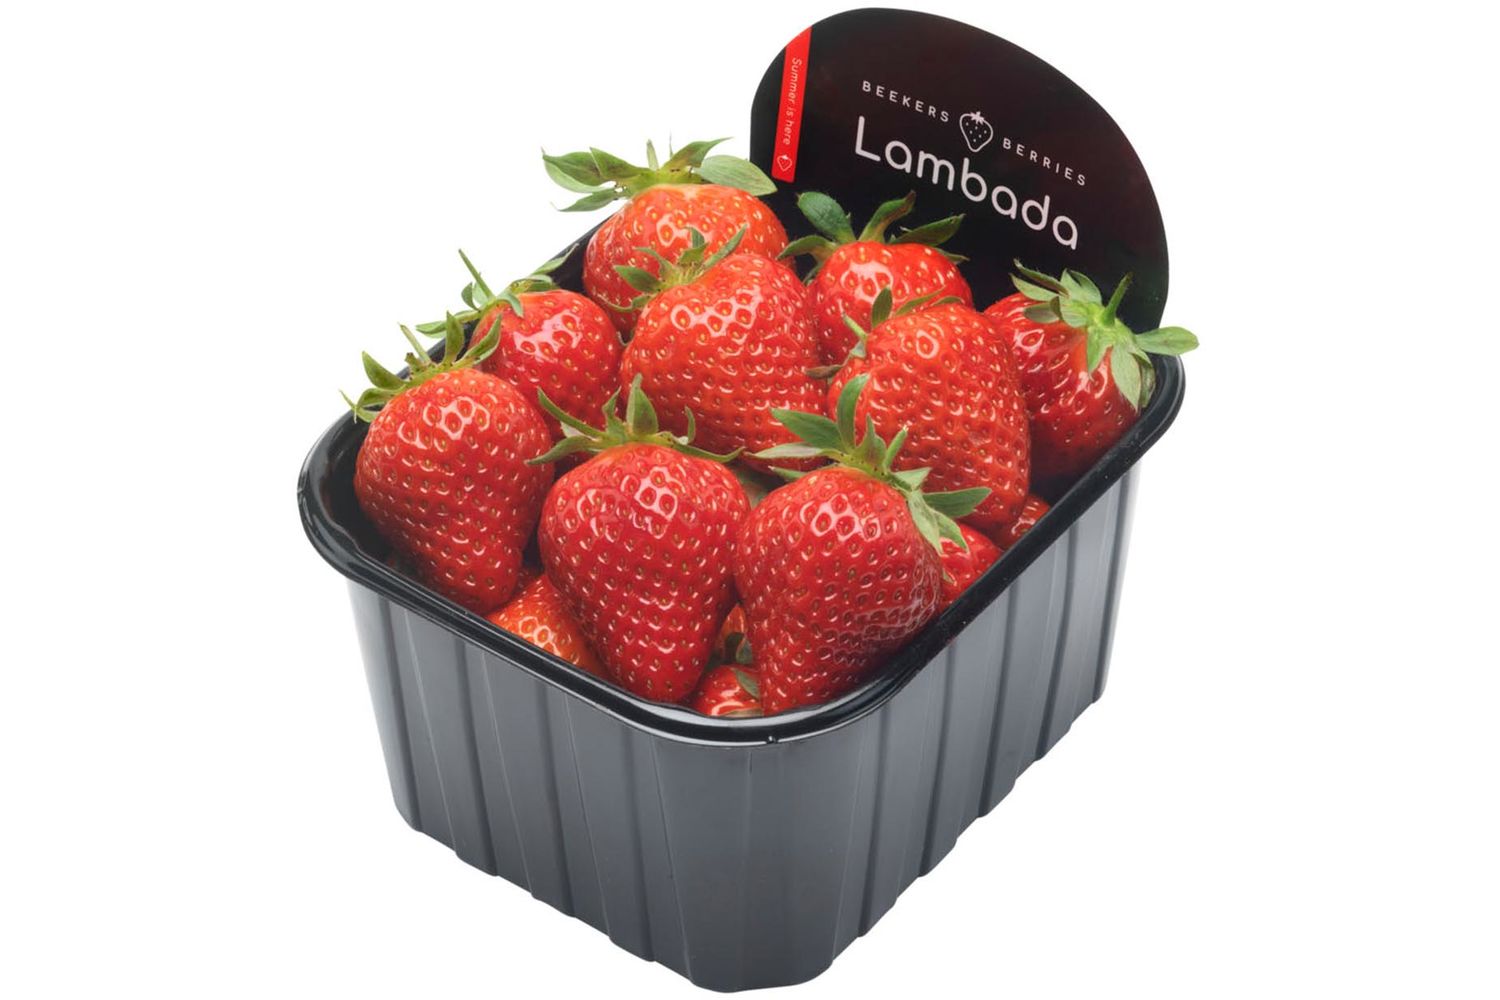 Strawberries lambada Holland 200gr crade 8 pieces 2